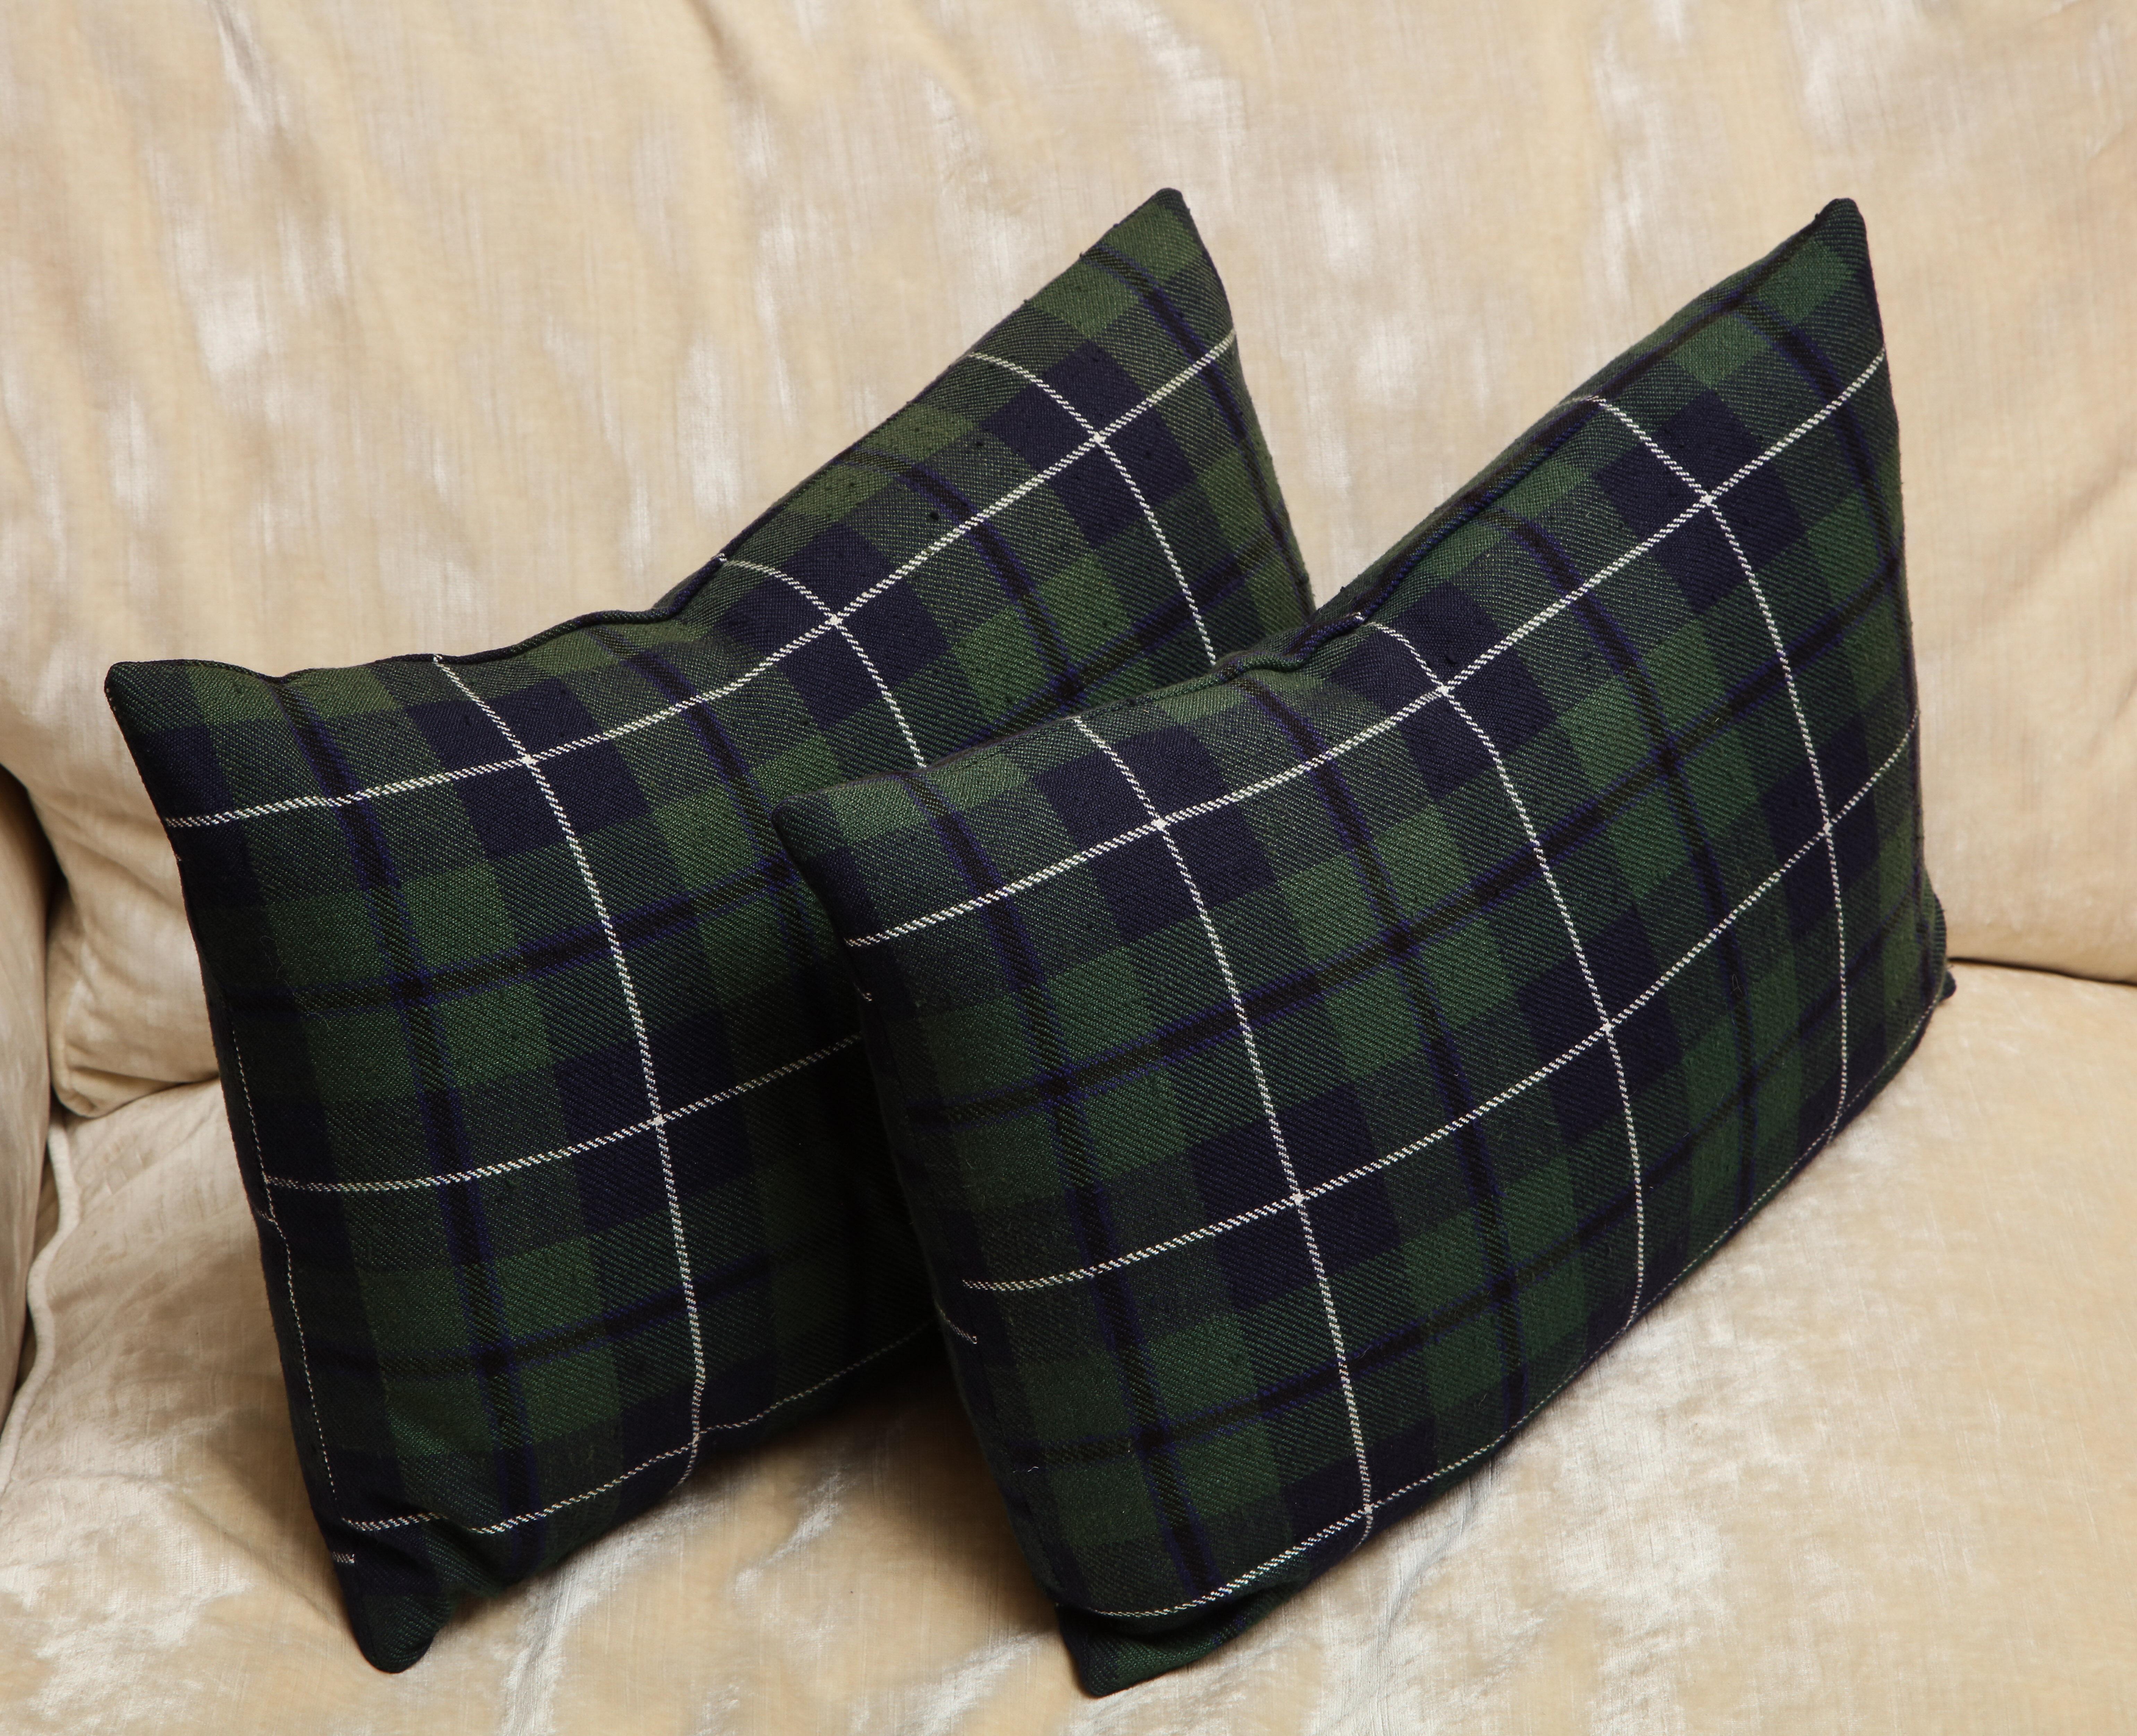 Wool Tartan Pillows Associated to Clan Urquhart from Scotland For Sale